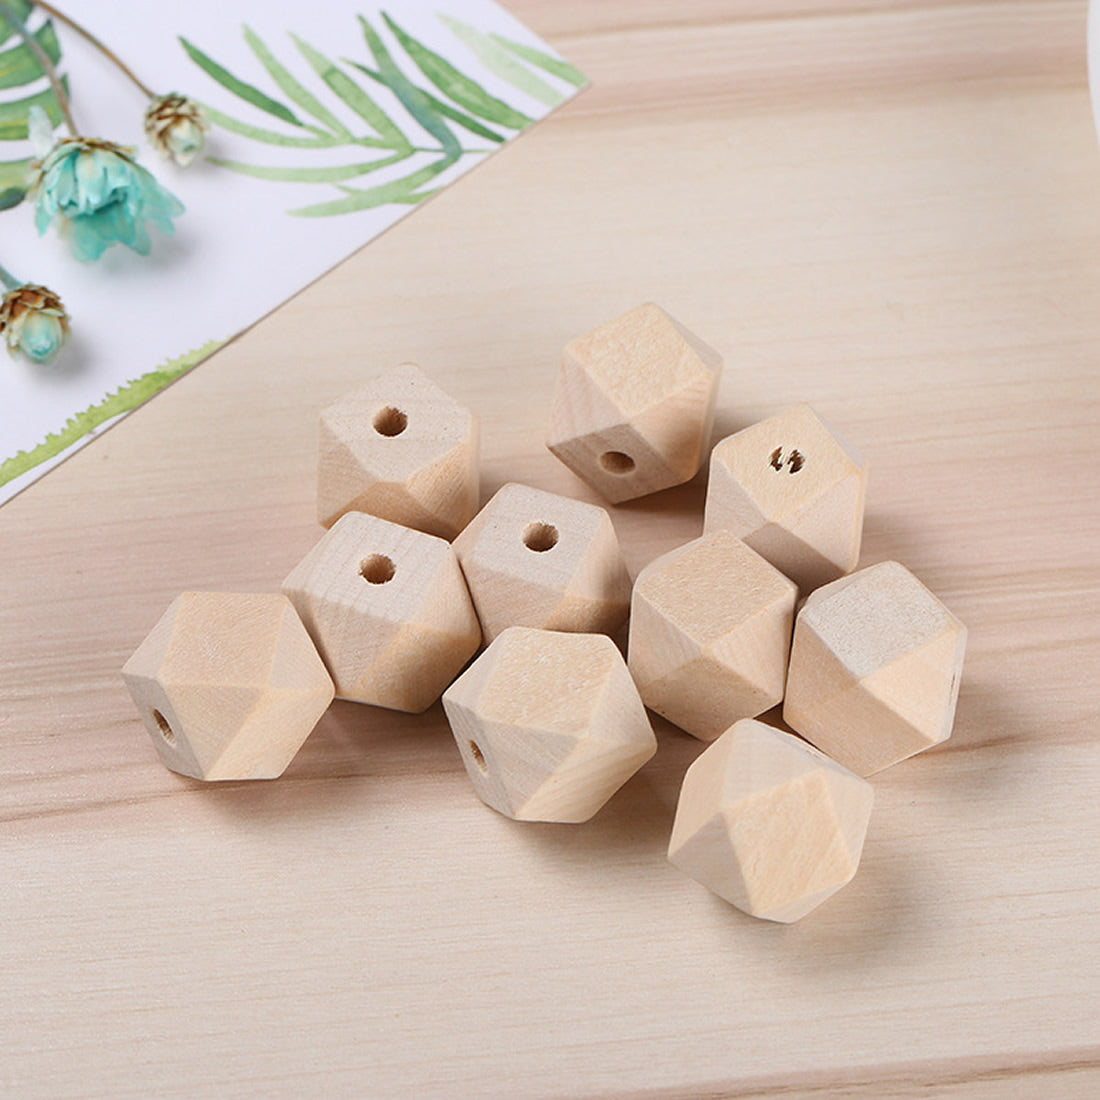 10 Hexagon unfinished wood beads